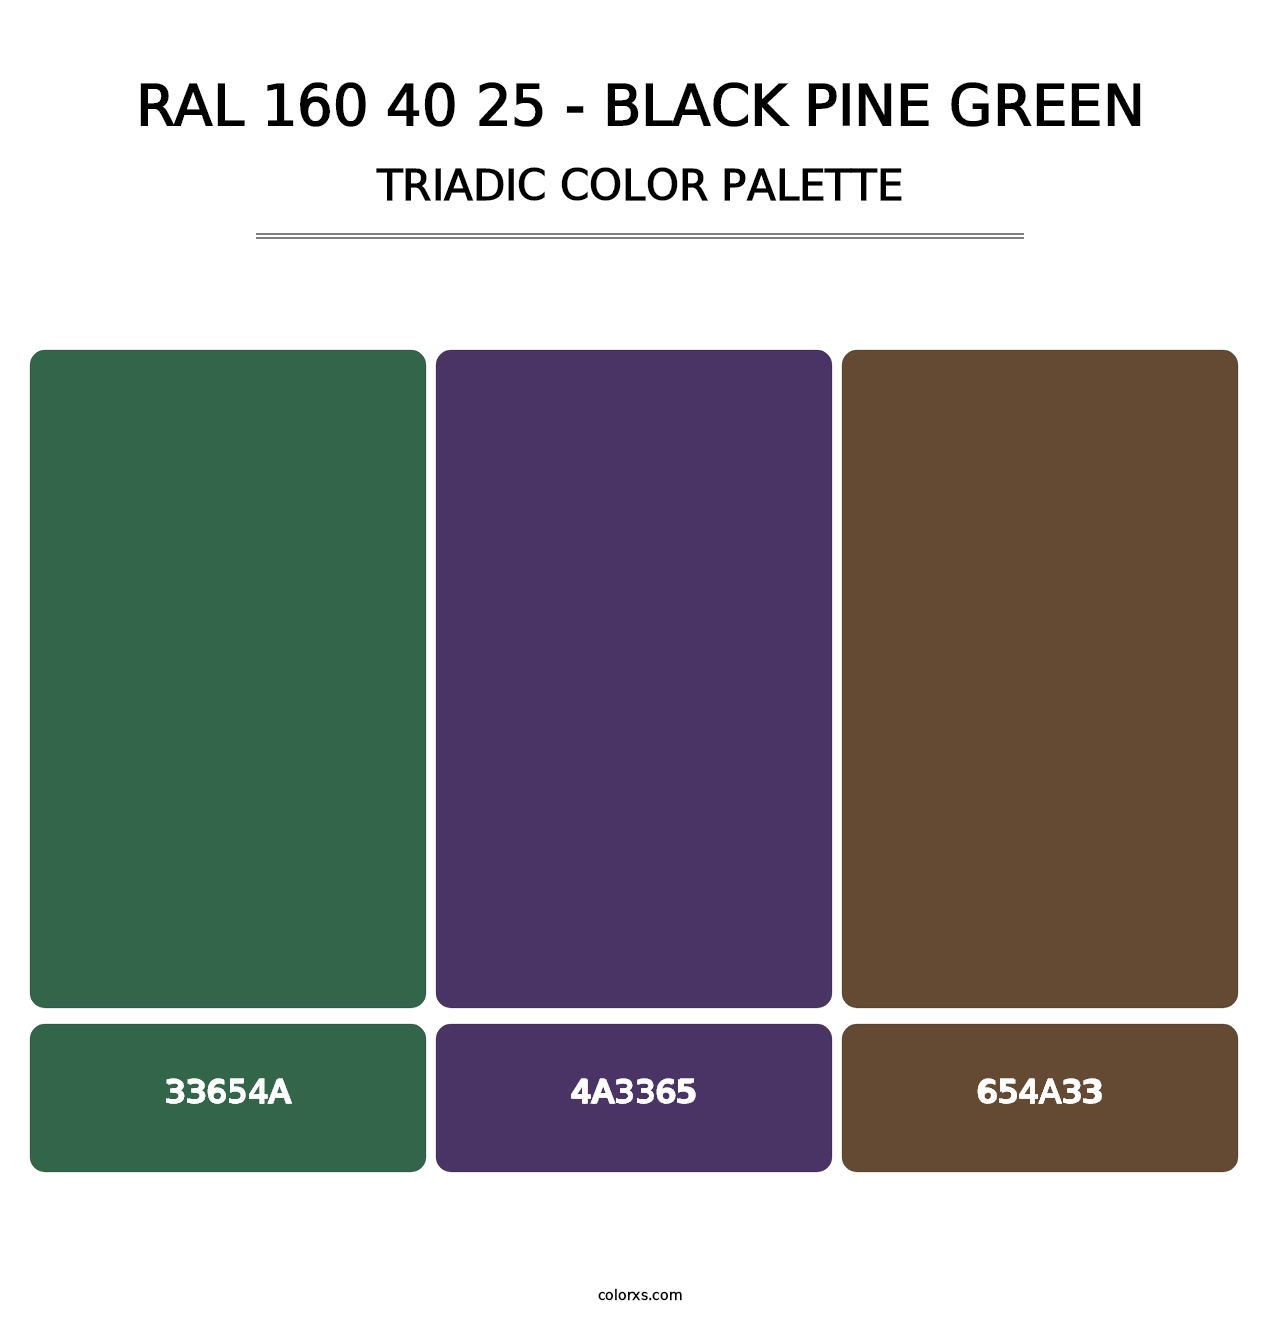 RAL 160 40 25 - Black Pine Green - Triadic Color Palette